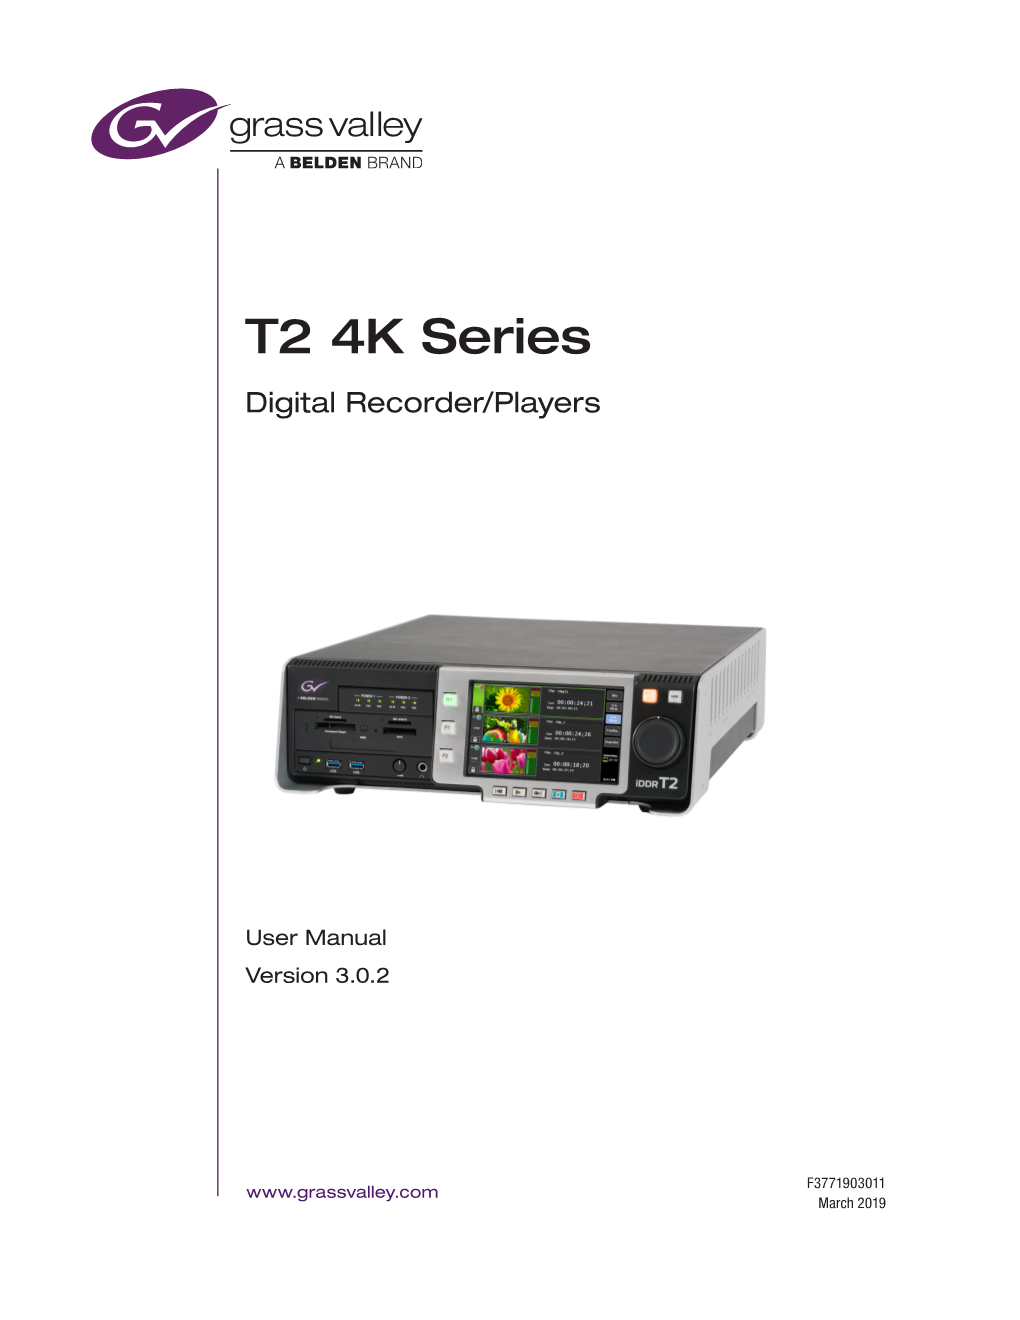 T2 4K Series Digital Recorder/Players